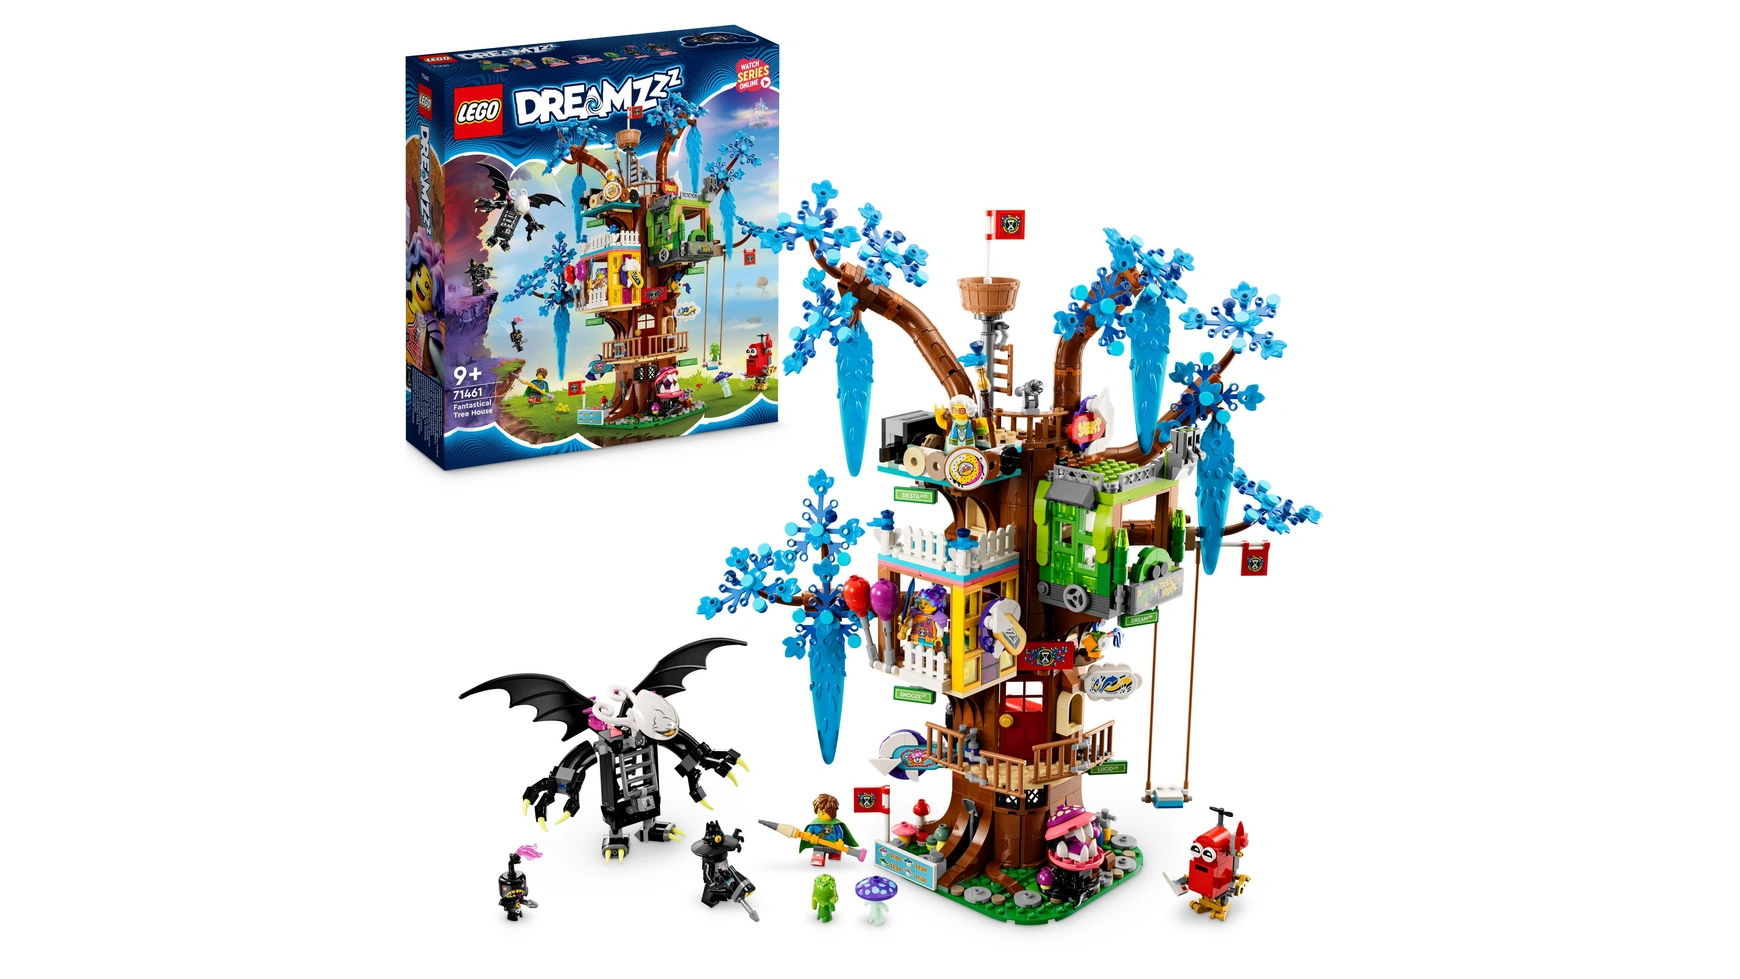 Lego DREAMZzz Фантастический домик на дереве, соберите 2 типа модели lego dreamzzz 71459 стойло сновидений